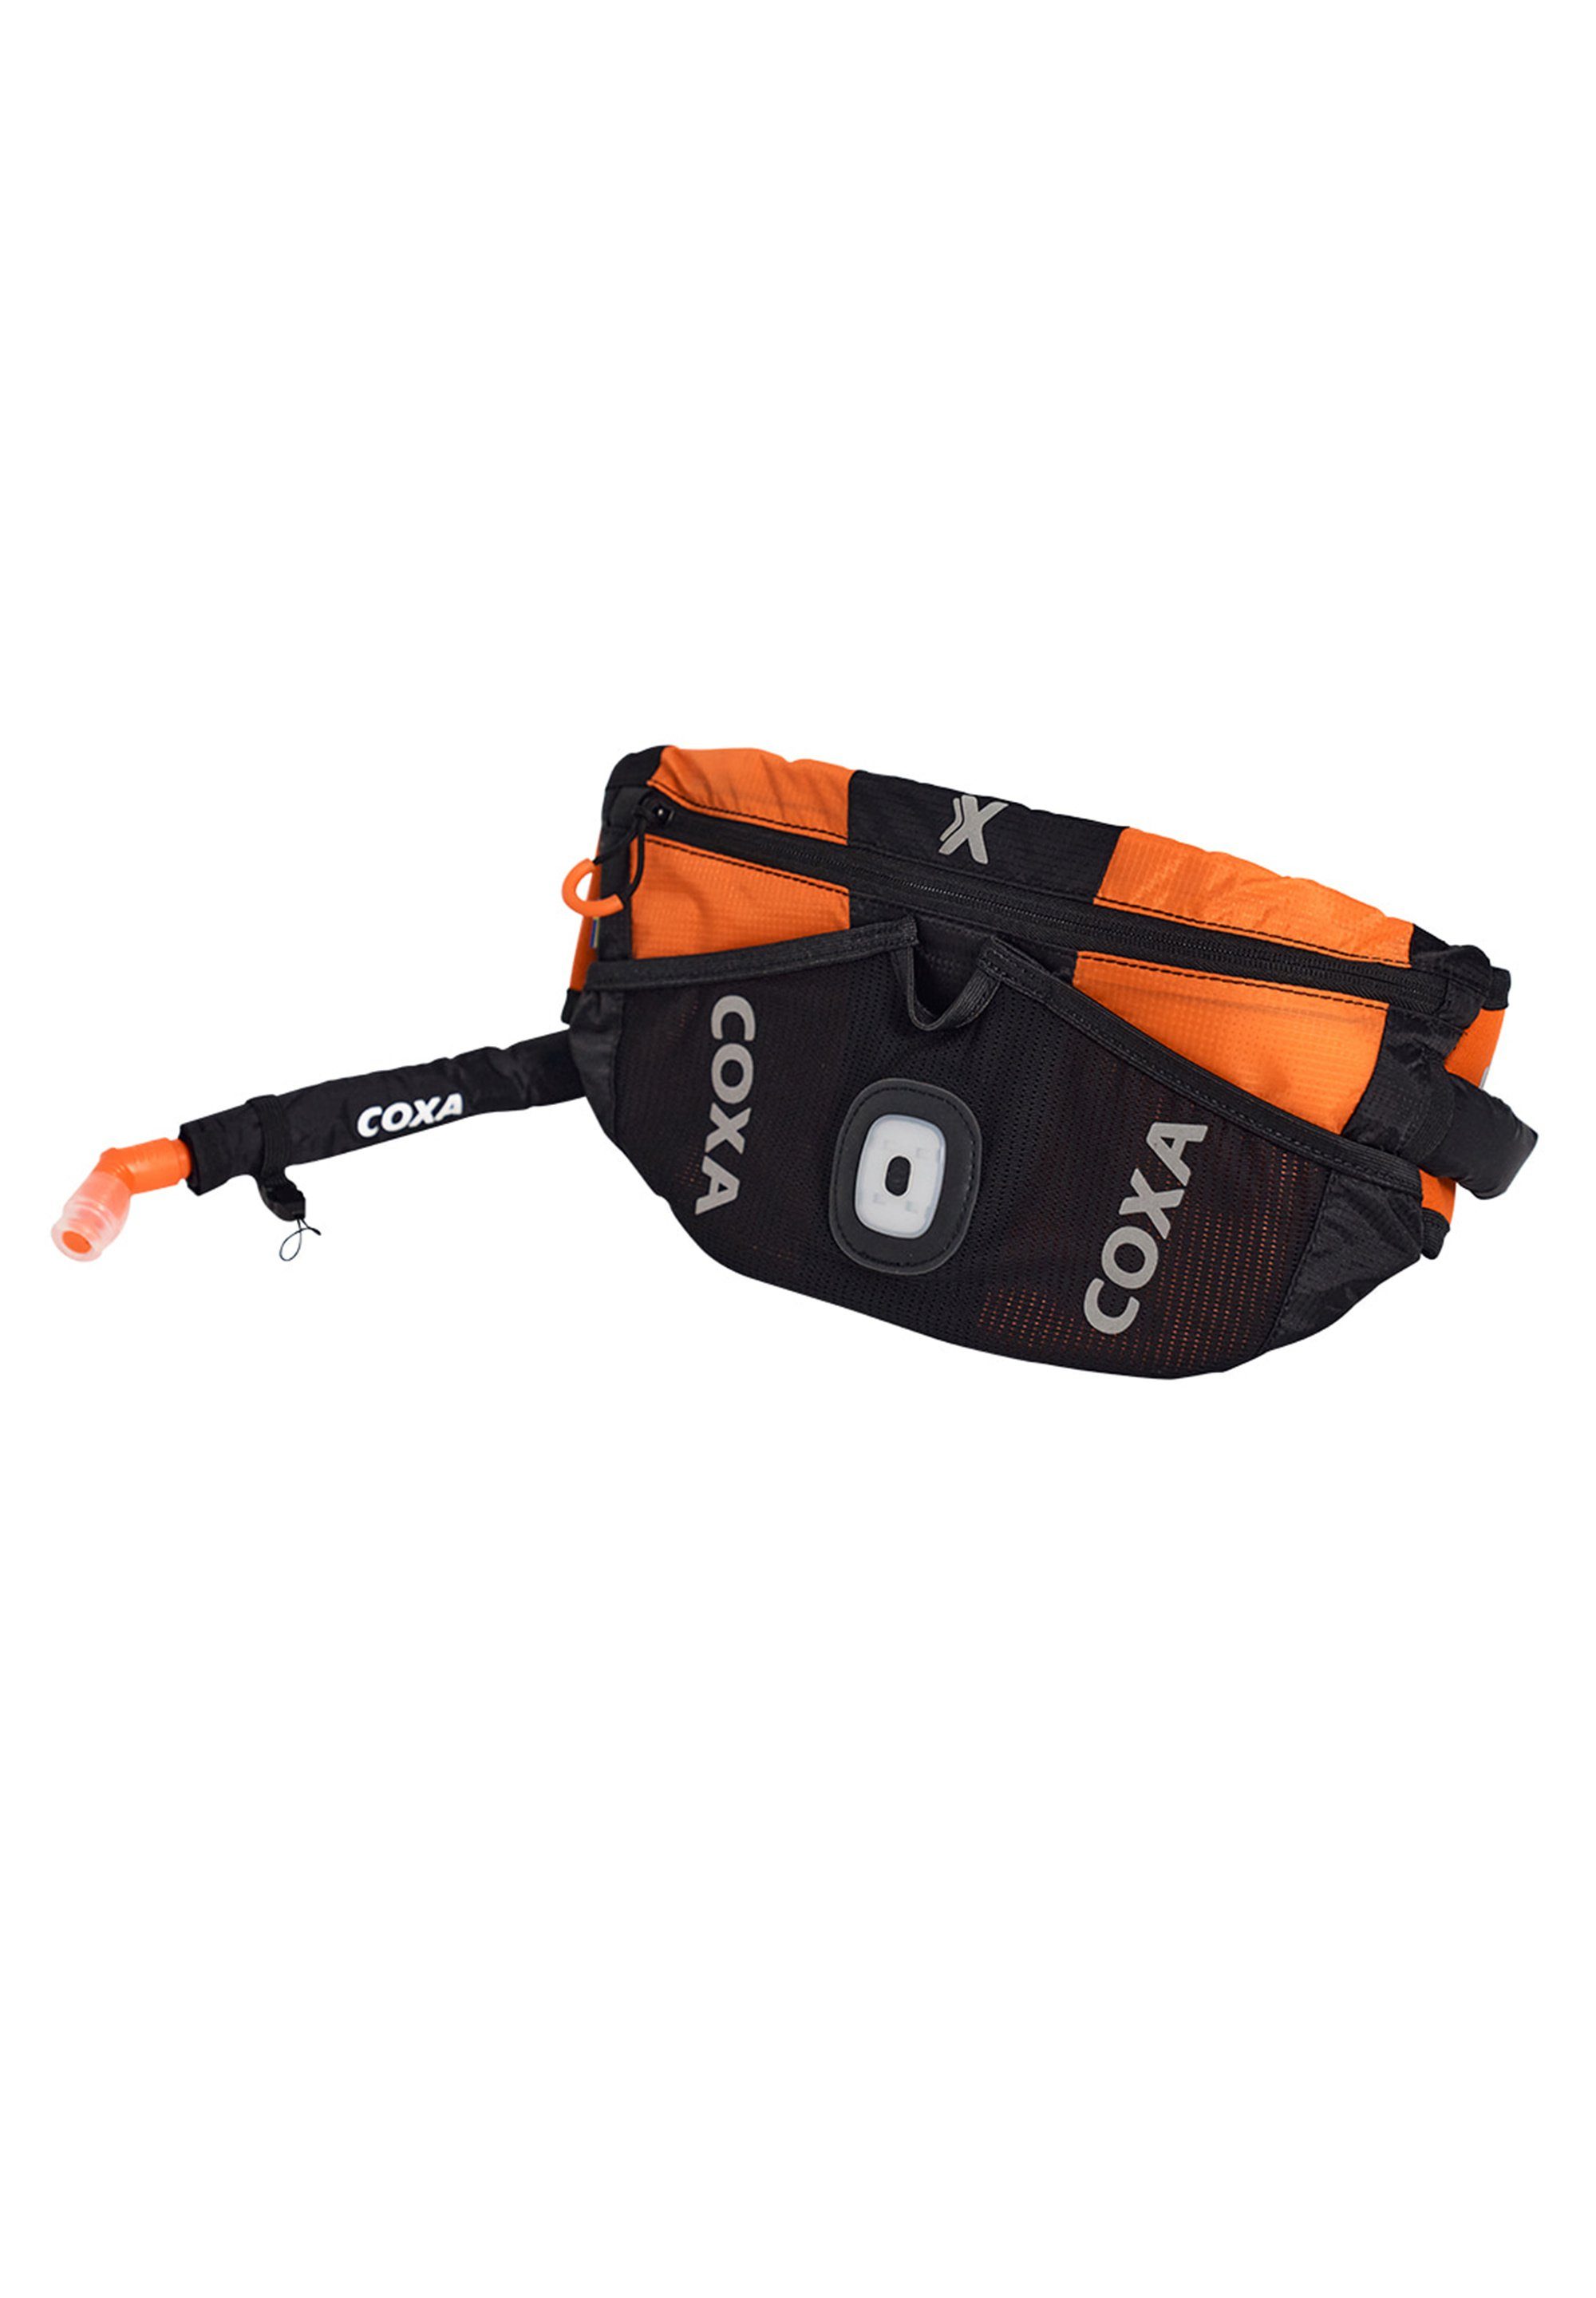 Gürteltasche outdoor Orange, Coxa Carry sports, WR1